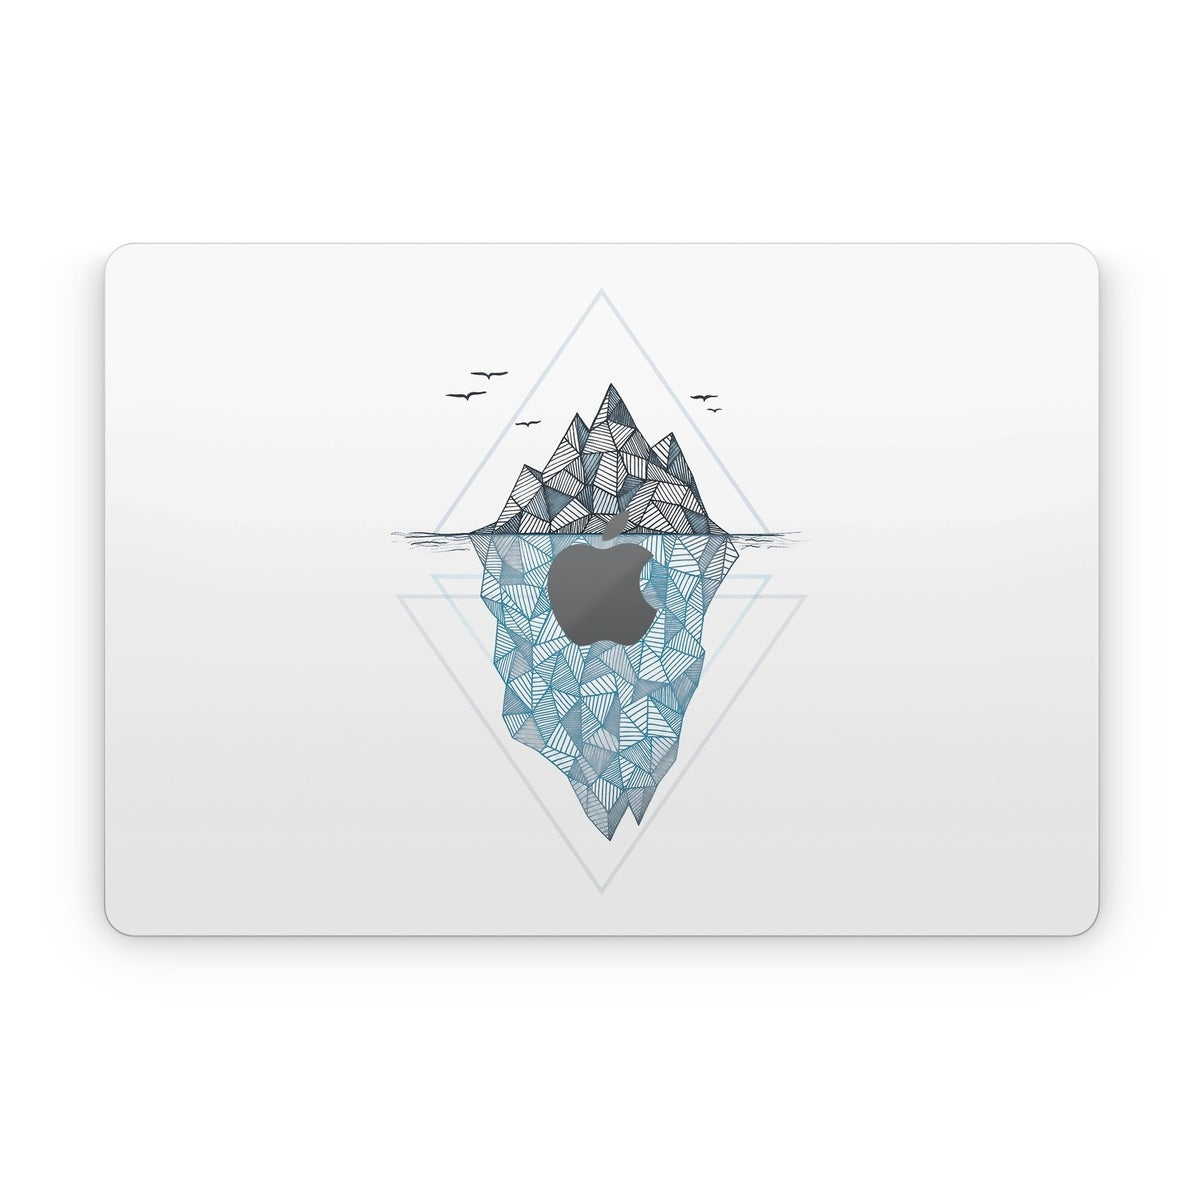 Iceberg - Apple MacBook Skin